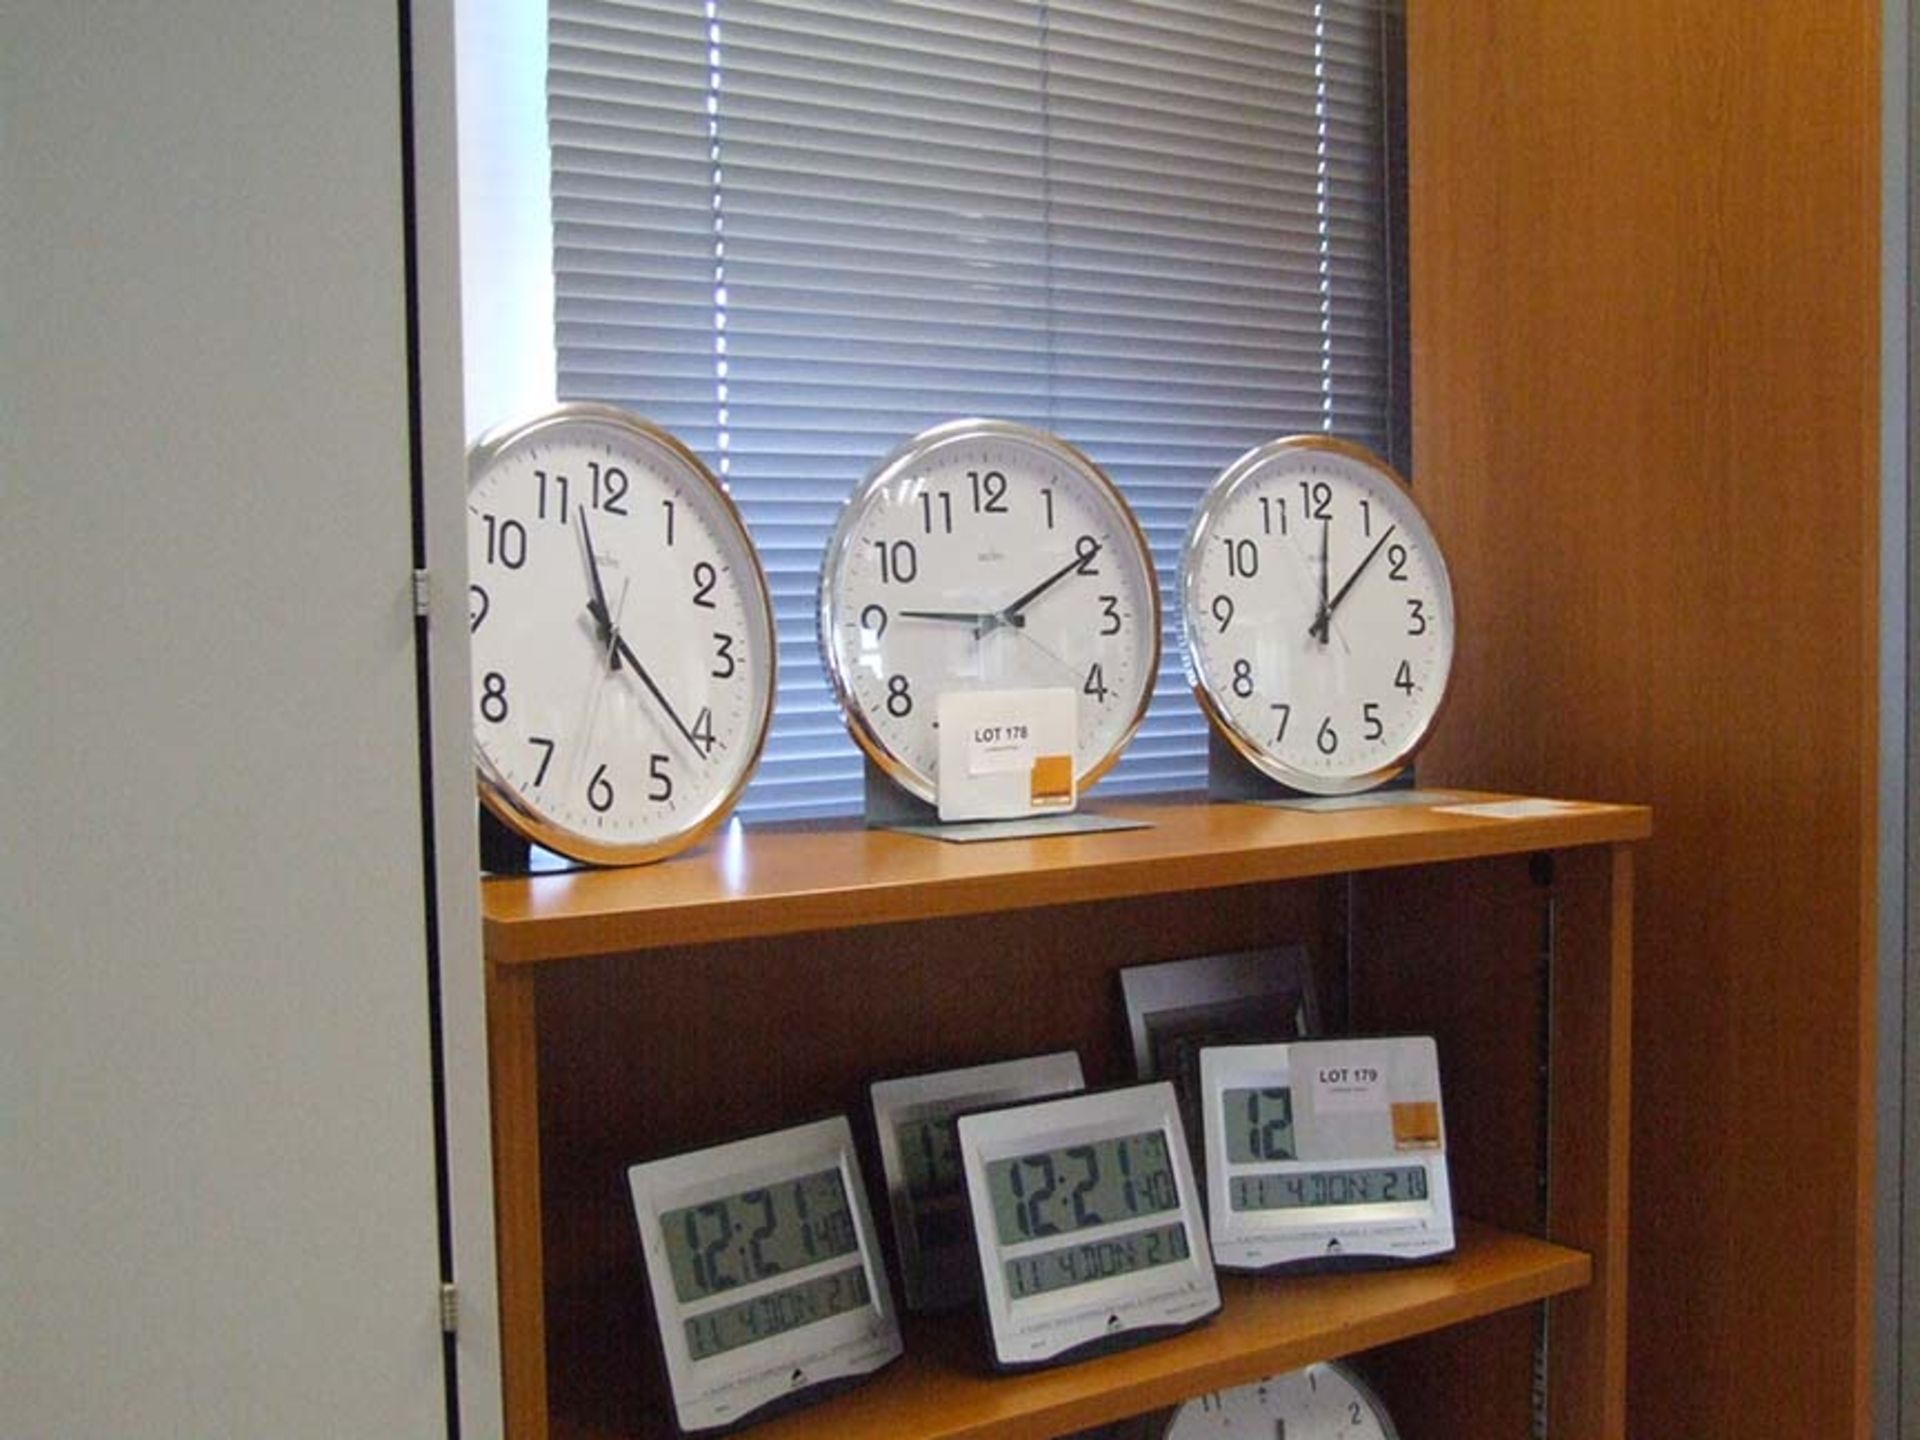 3 Analogue battery clocks on top shelf